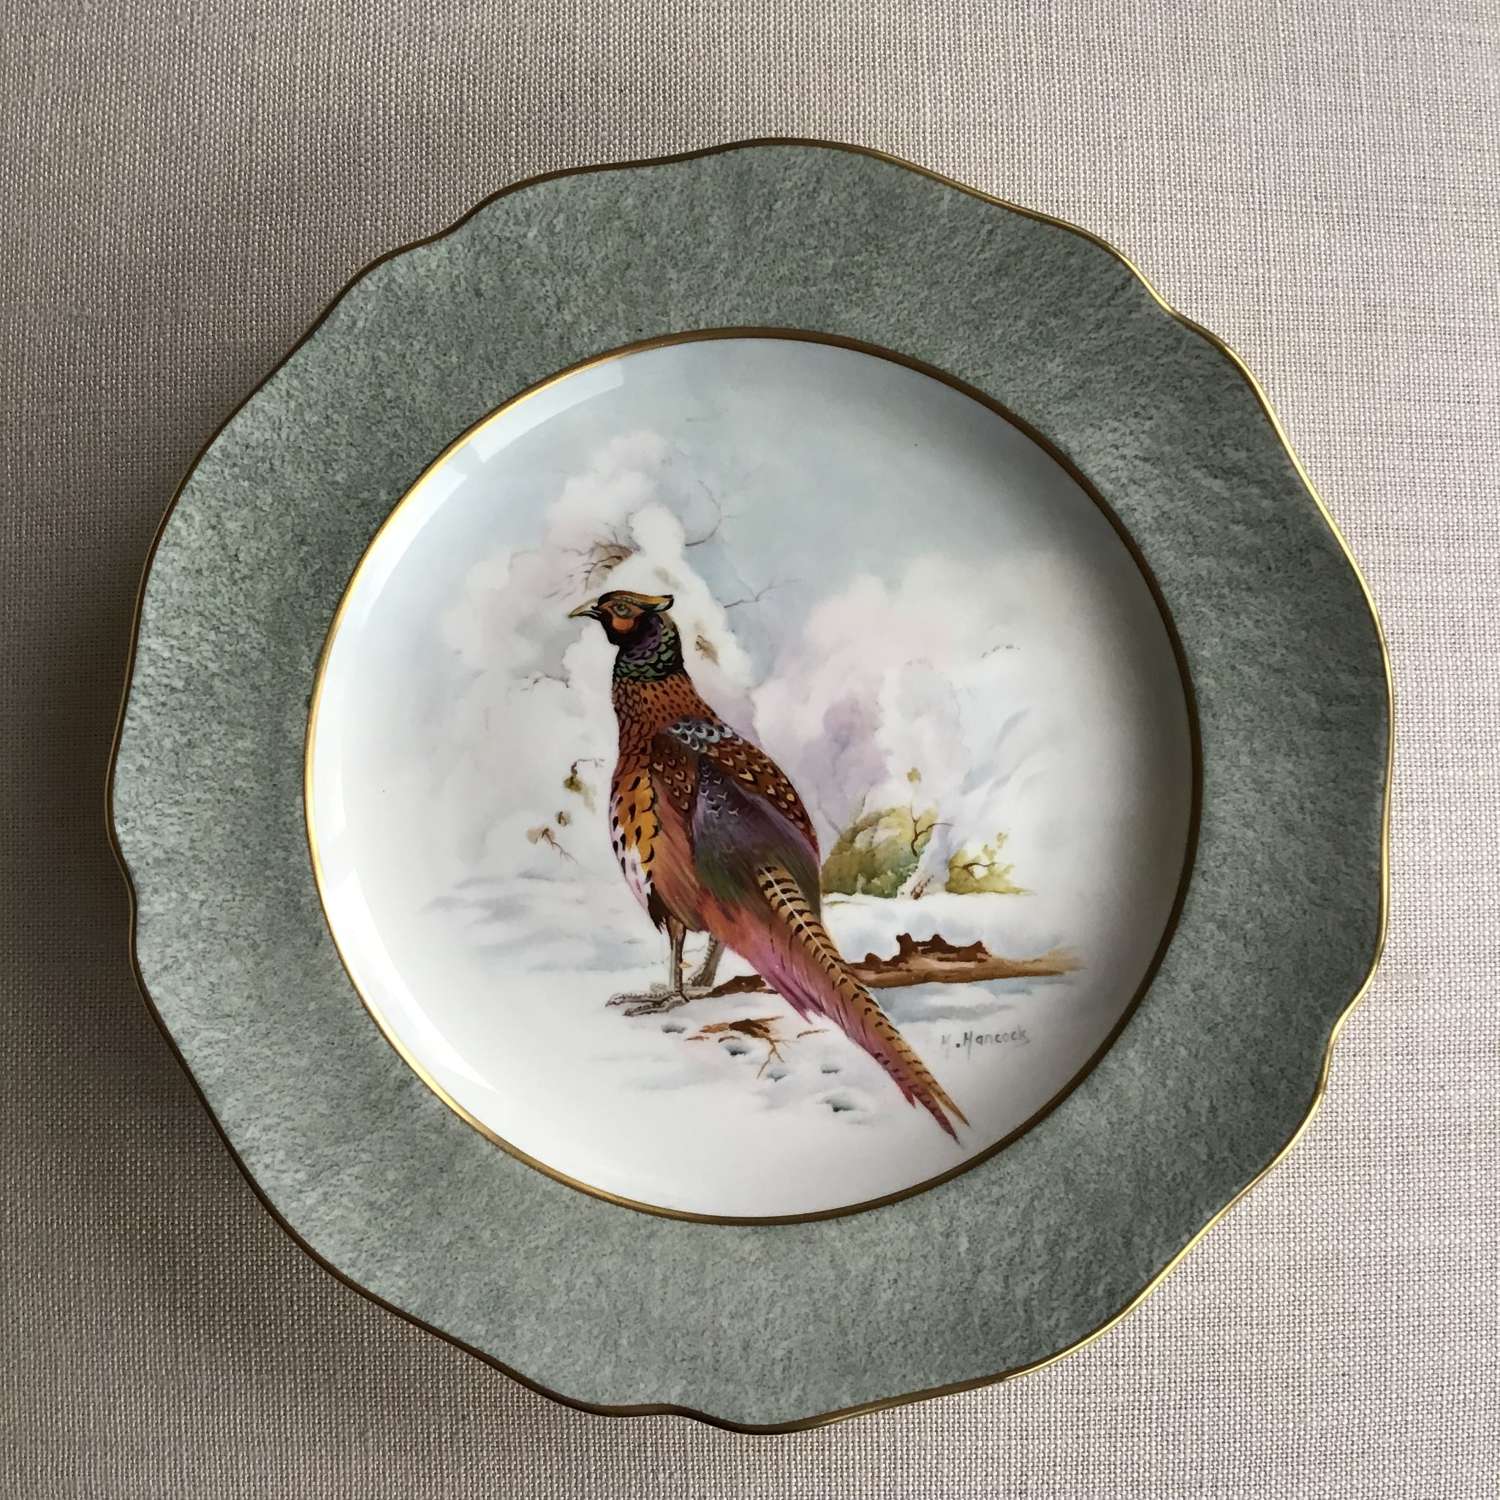 Sutherland bone china plate with a pheasant